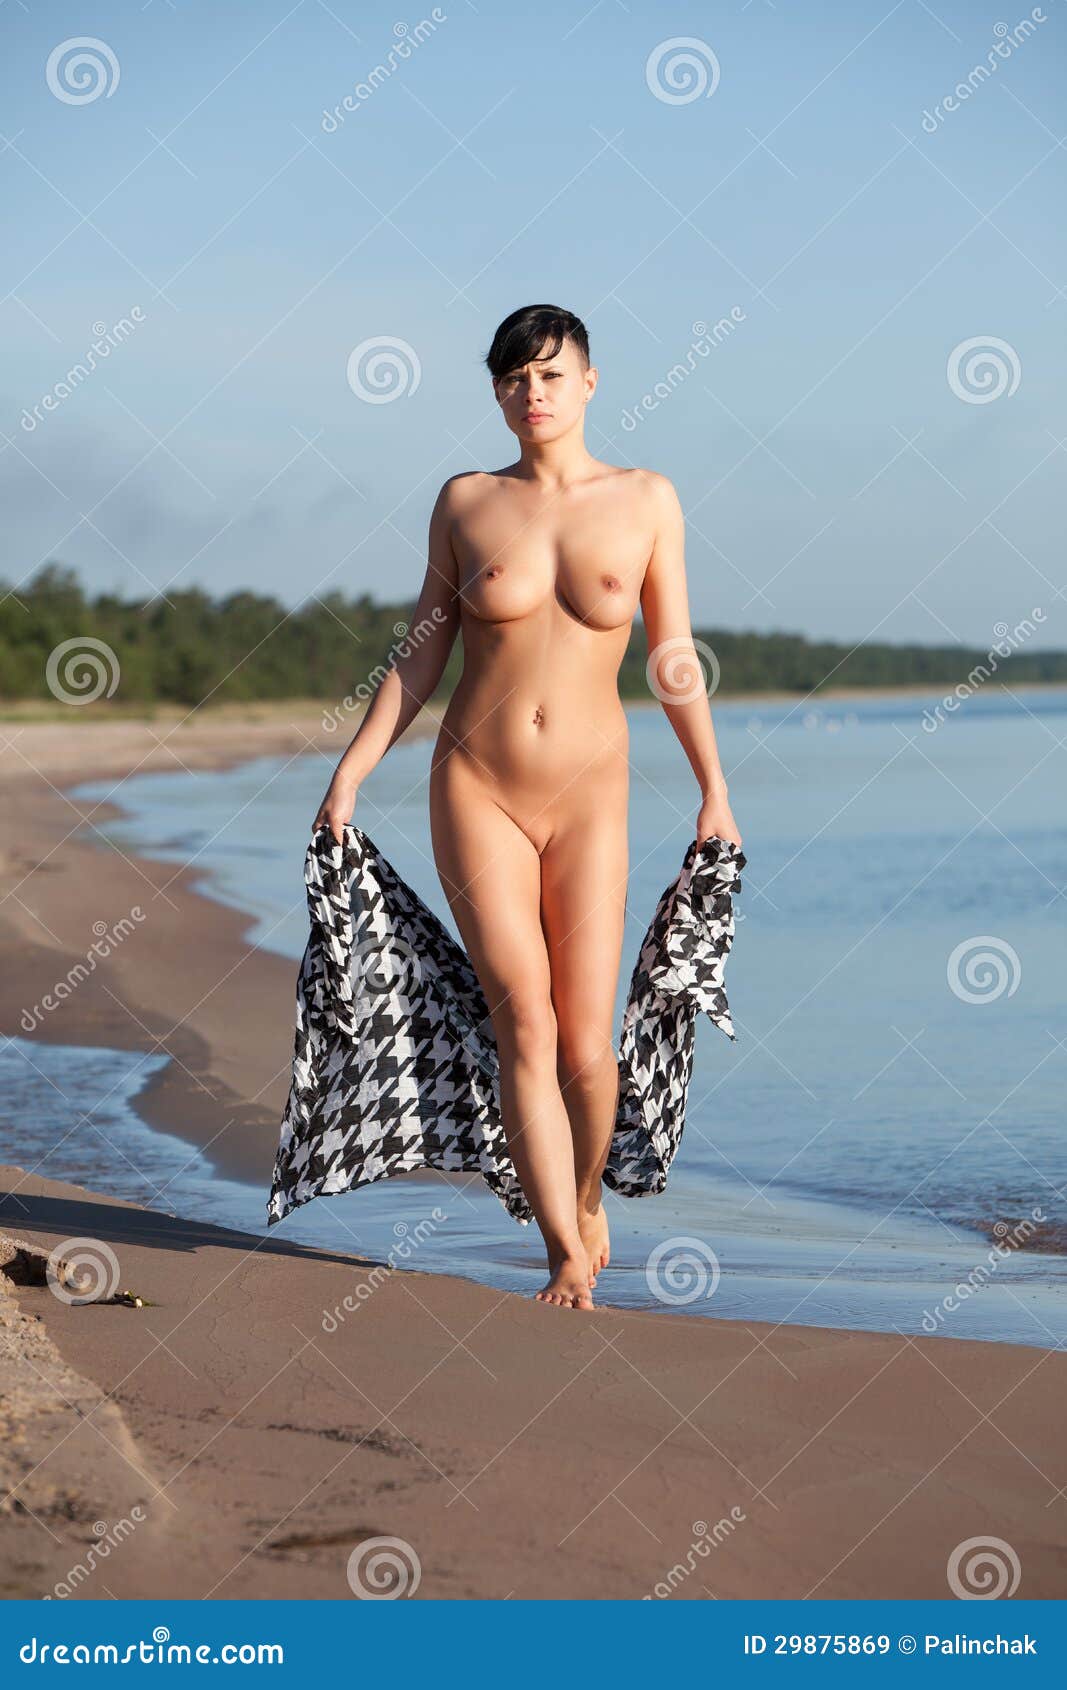 aaron james gray share naked woman on beach photos